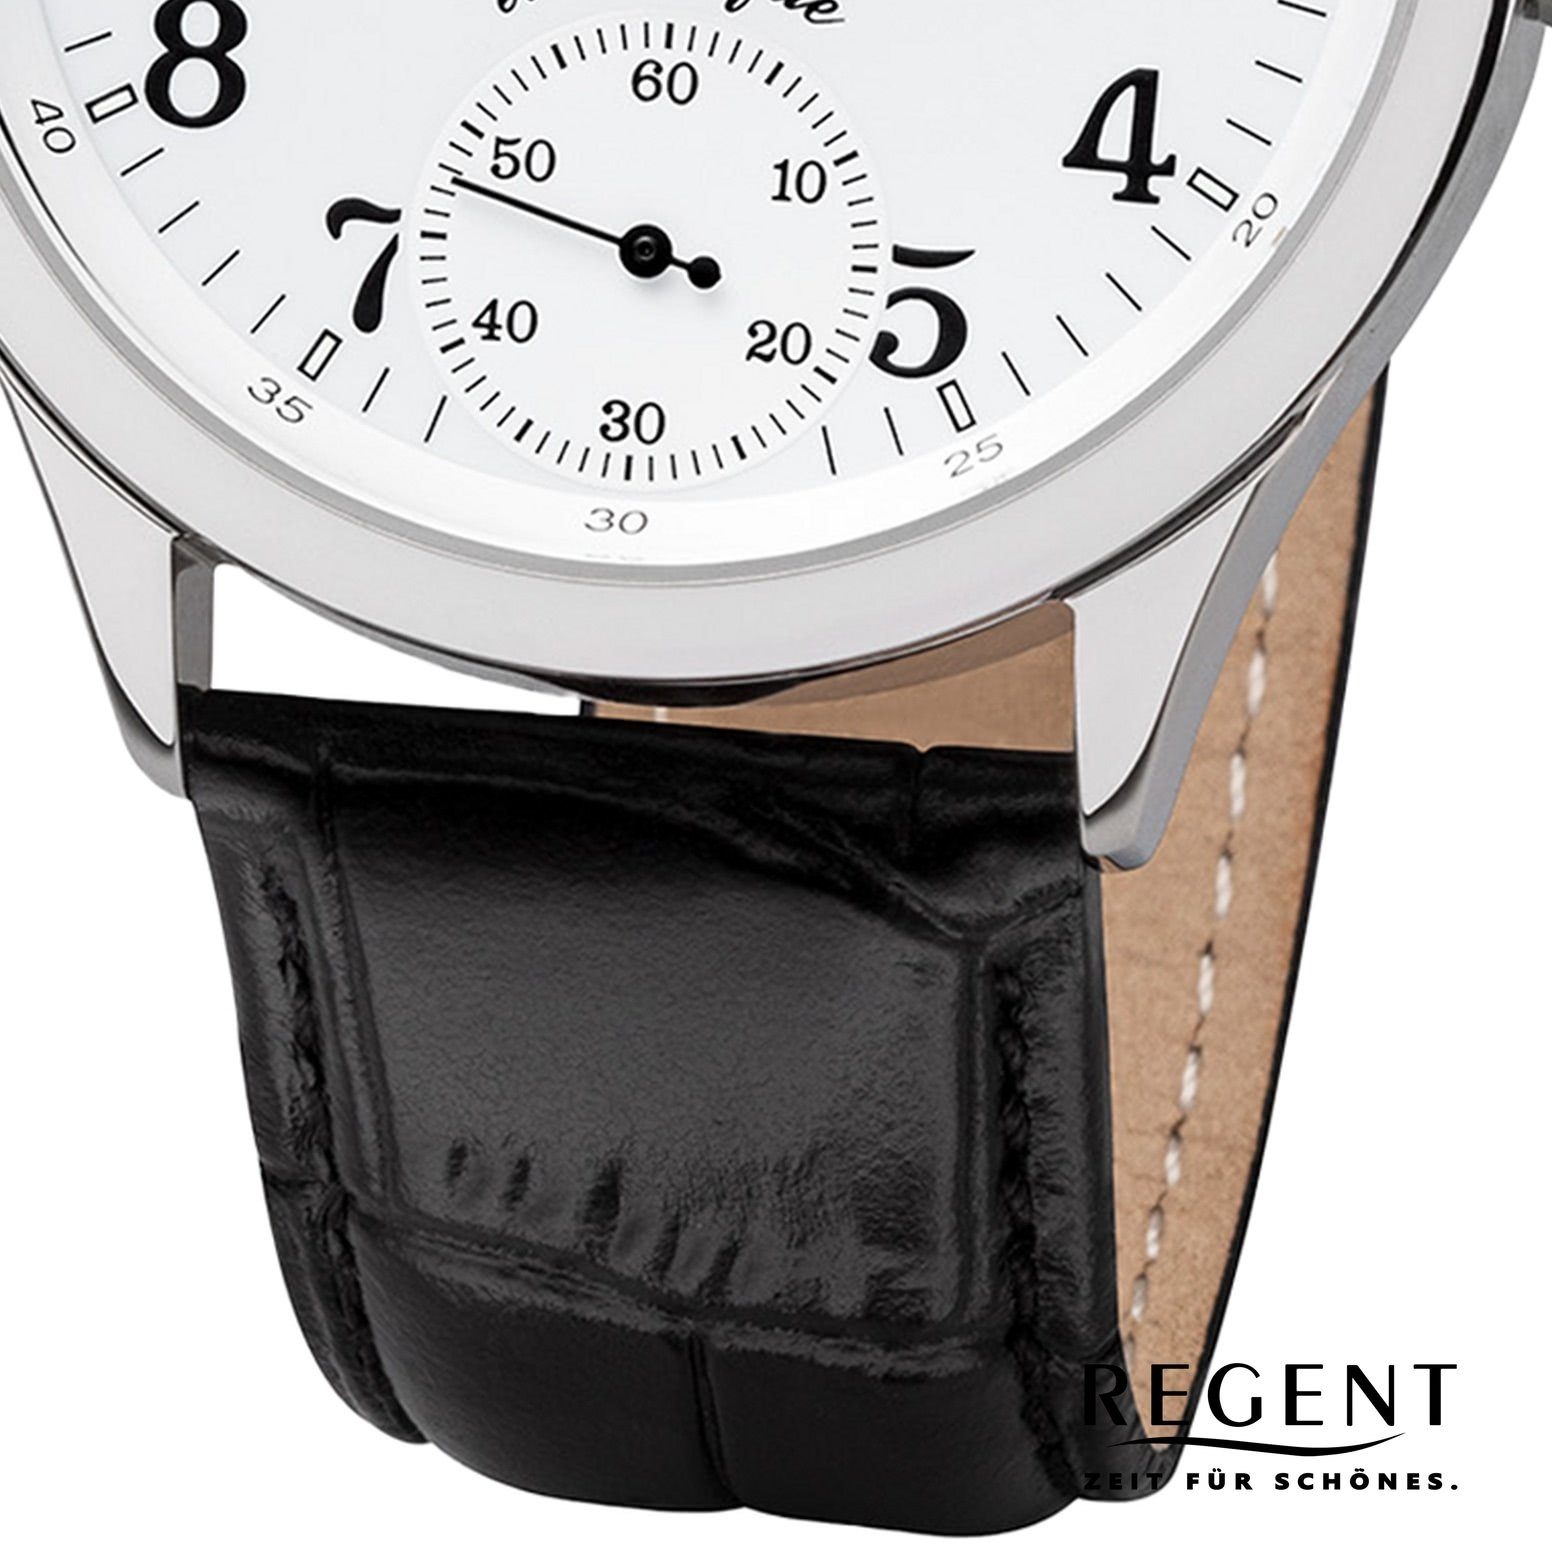 Regent Quarzuhr Regent Herren Armbanduhr rund, 42,5mm), Herren (ca. Lederbandarmband Armbanduhr Analoganzeige, groß